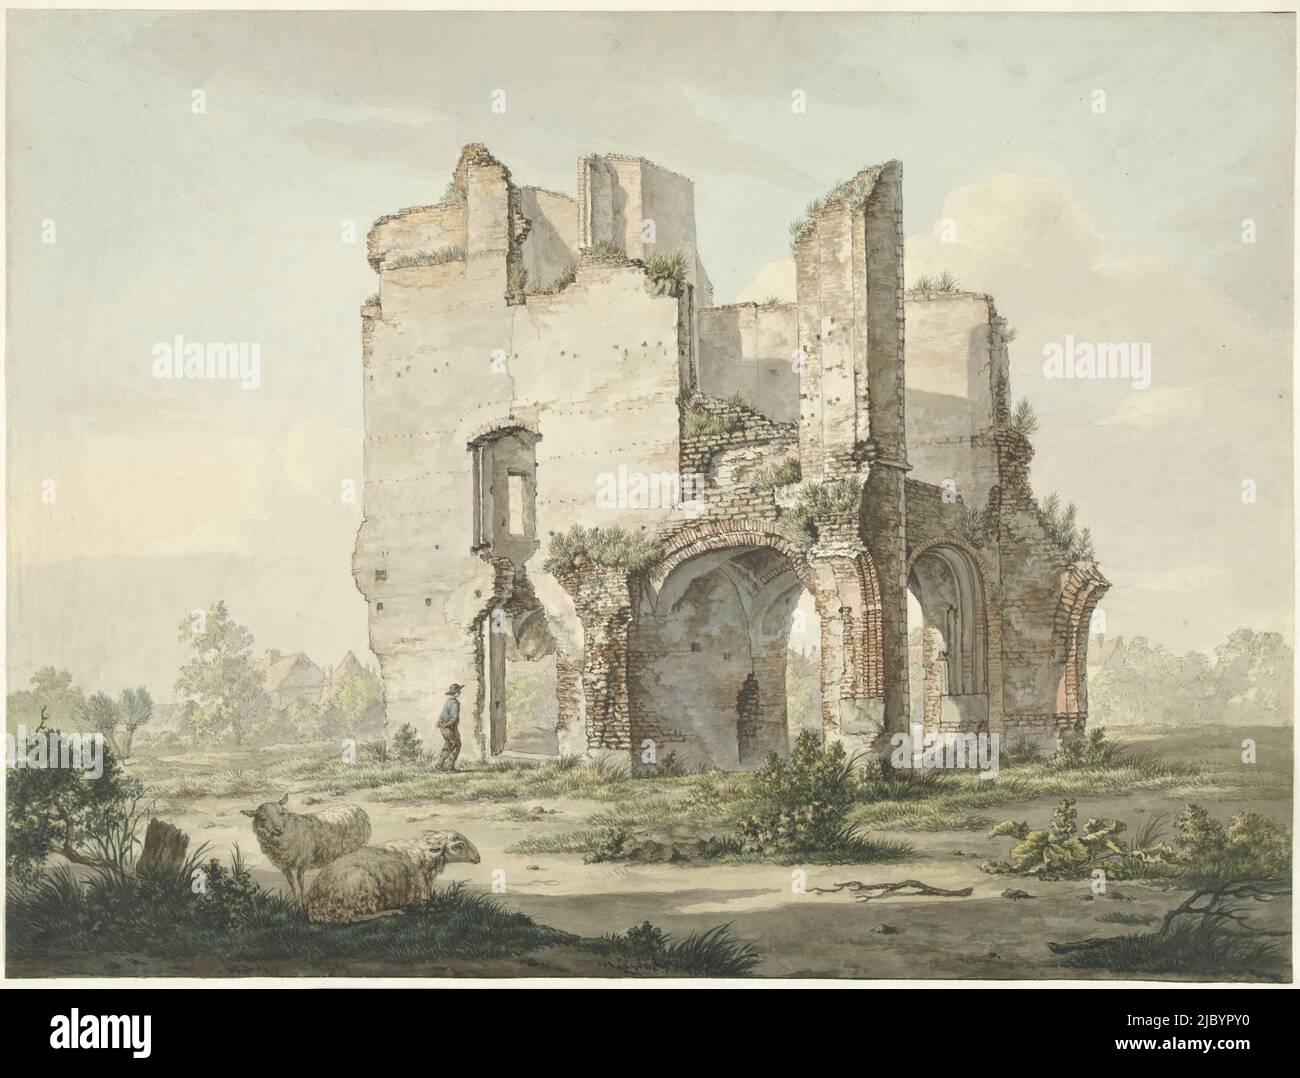 The ruin of the Abbey of Rijnsburg, Johannes van Lexmond, 1779 - 1838, draughtsman: Johannes van Lexmond, 1779 - 1838, paper, brush, h 403 mm × w 536 mm Stock Photo